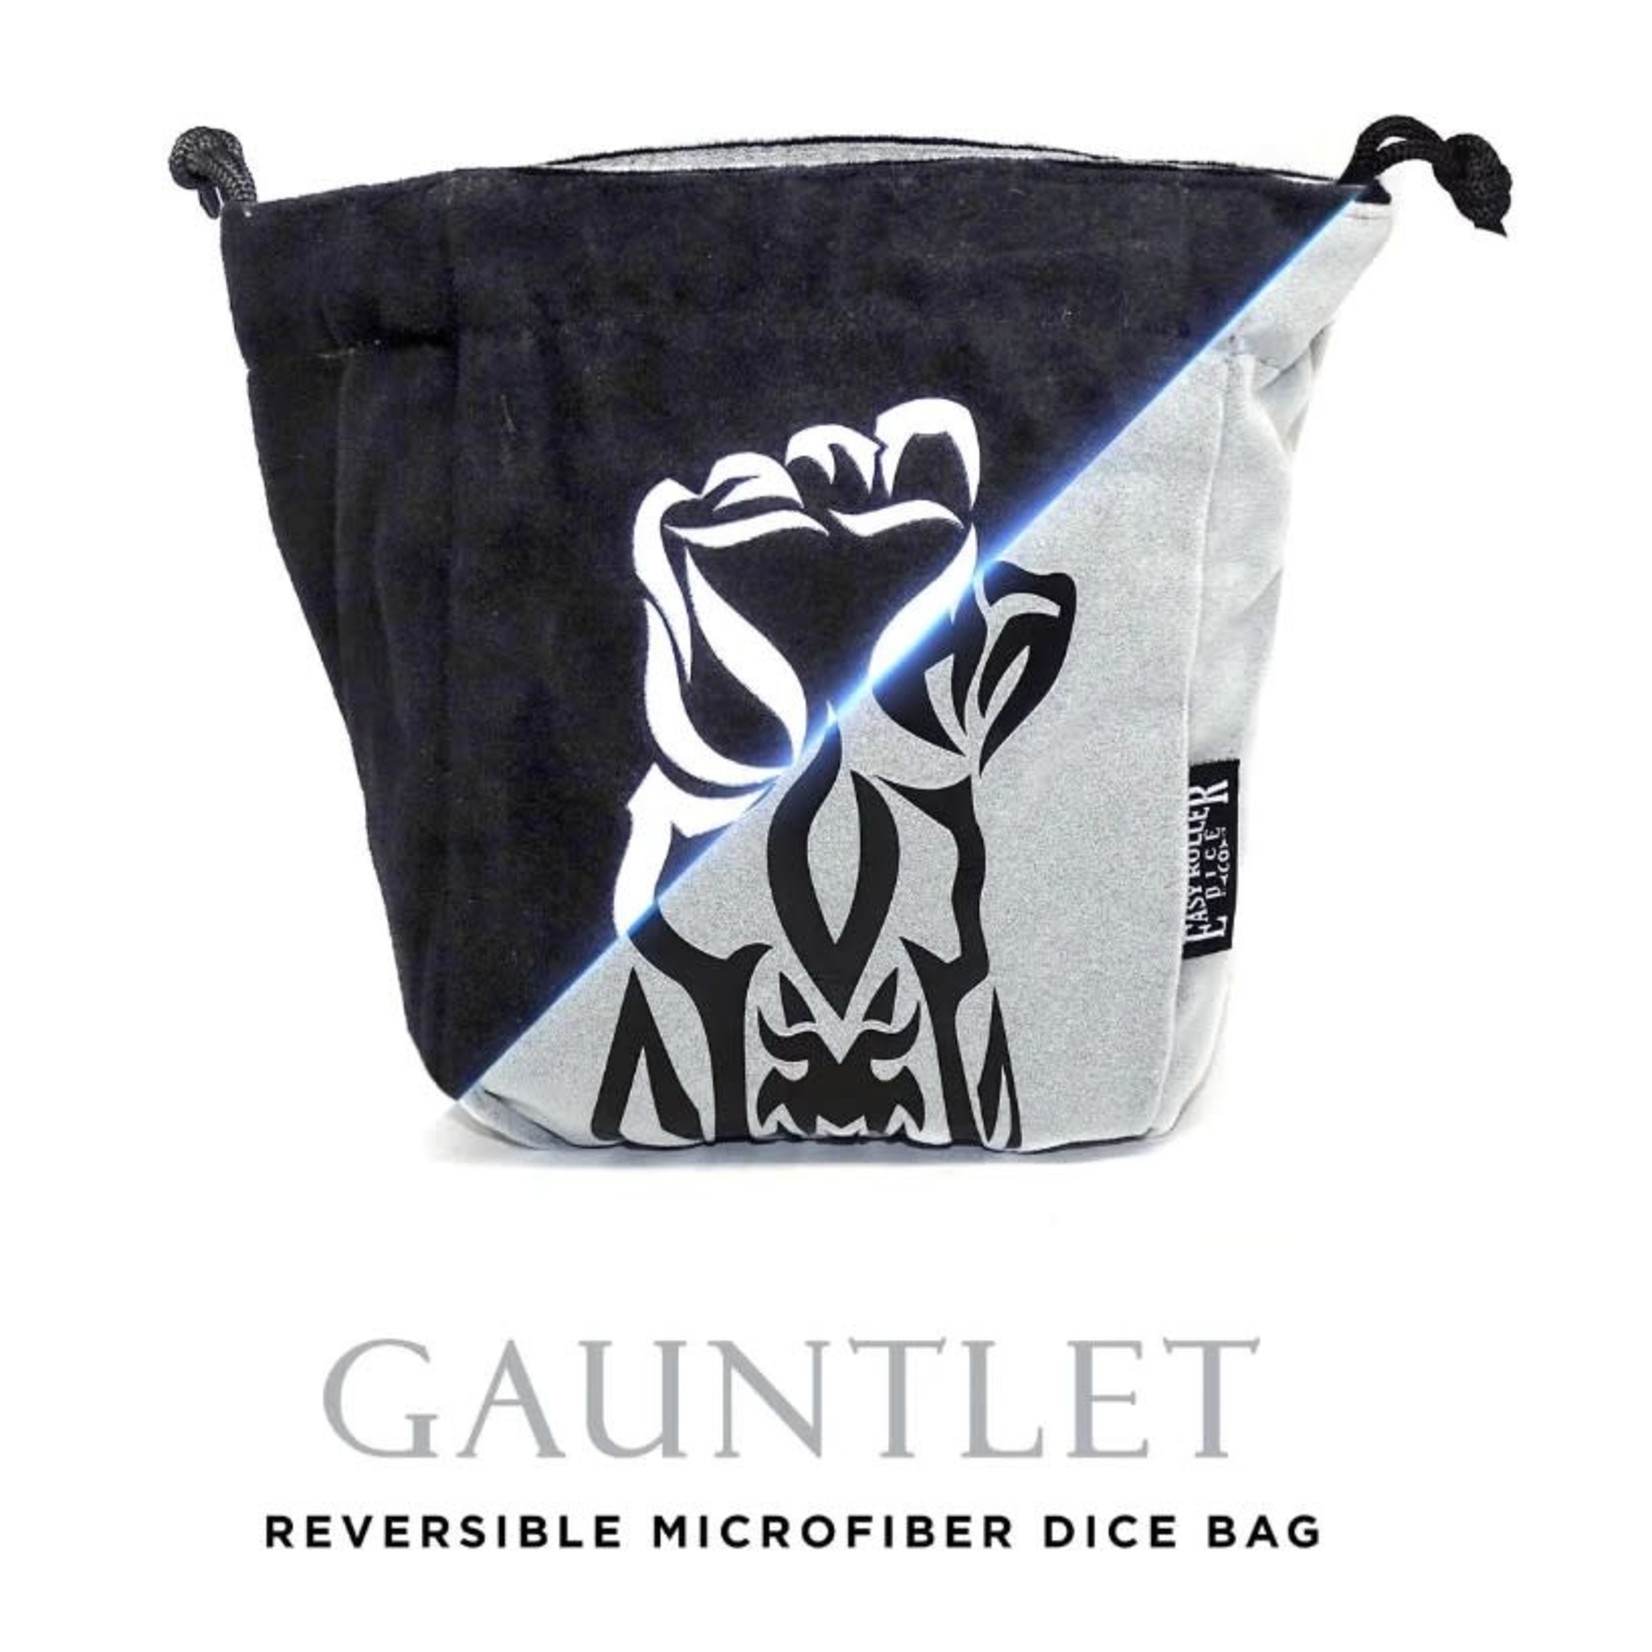 Easy Roller Dice Reversible Microfiber Self-Standing Large Dice Bag: Gauntlet